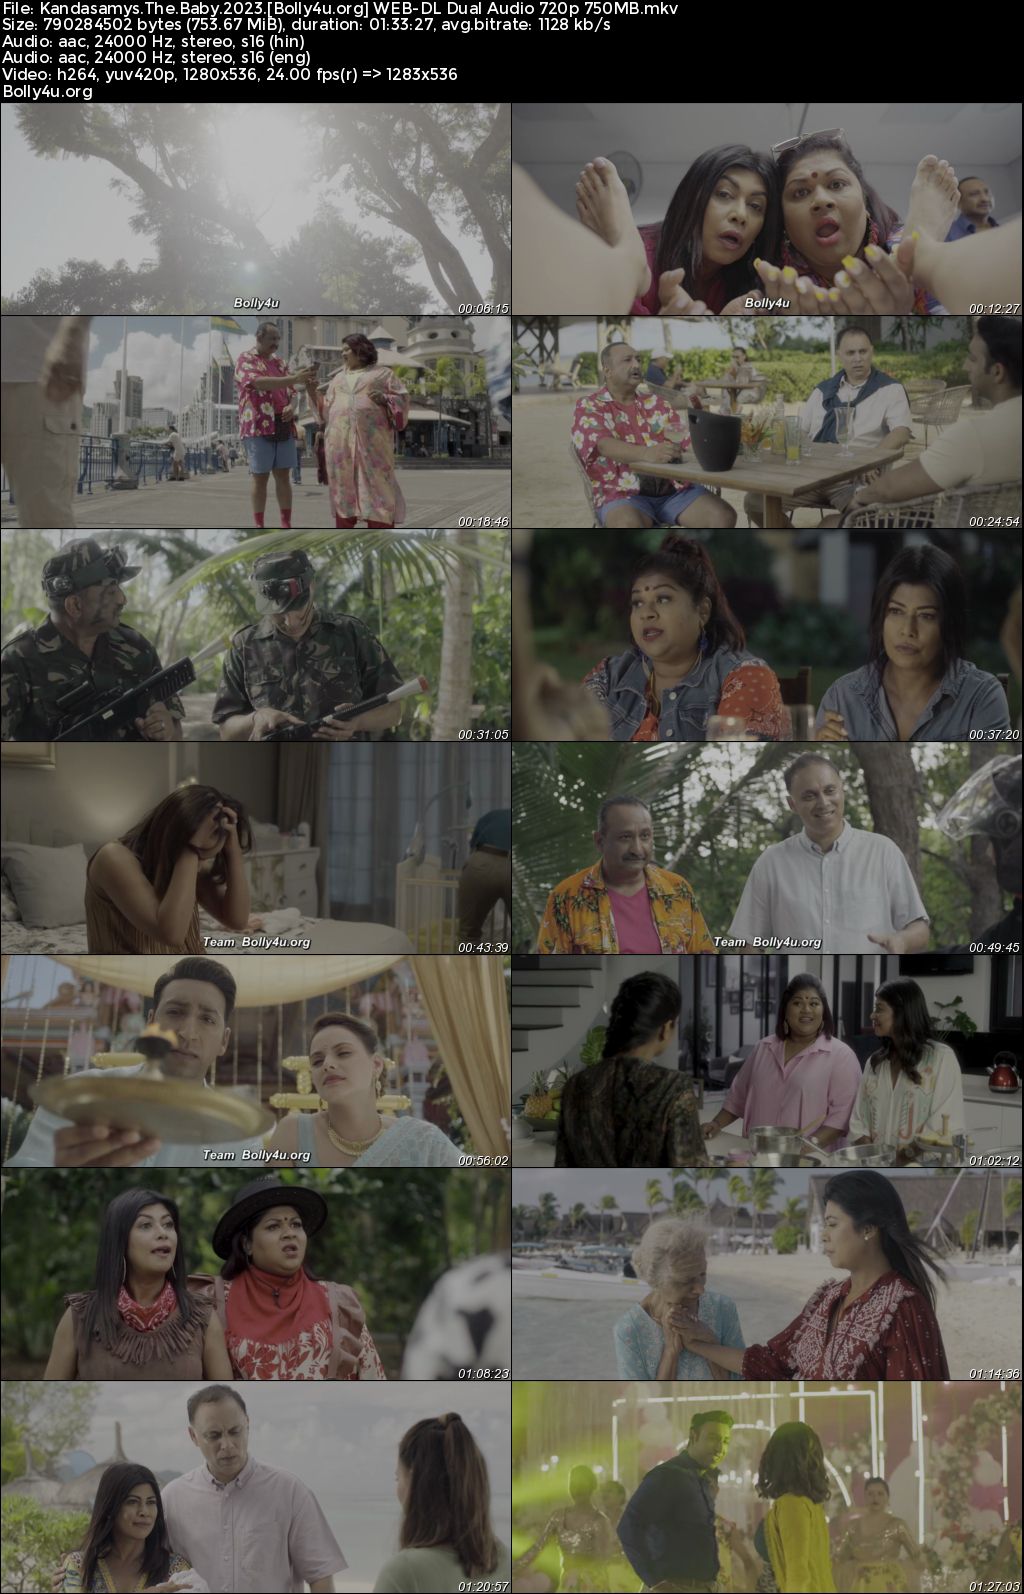 Kandasamys The Baby 2023 WEB-DL Hindi Dual Audio Full Movie Download 1080p 720p 480p